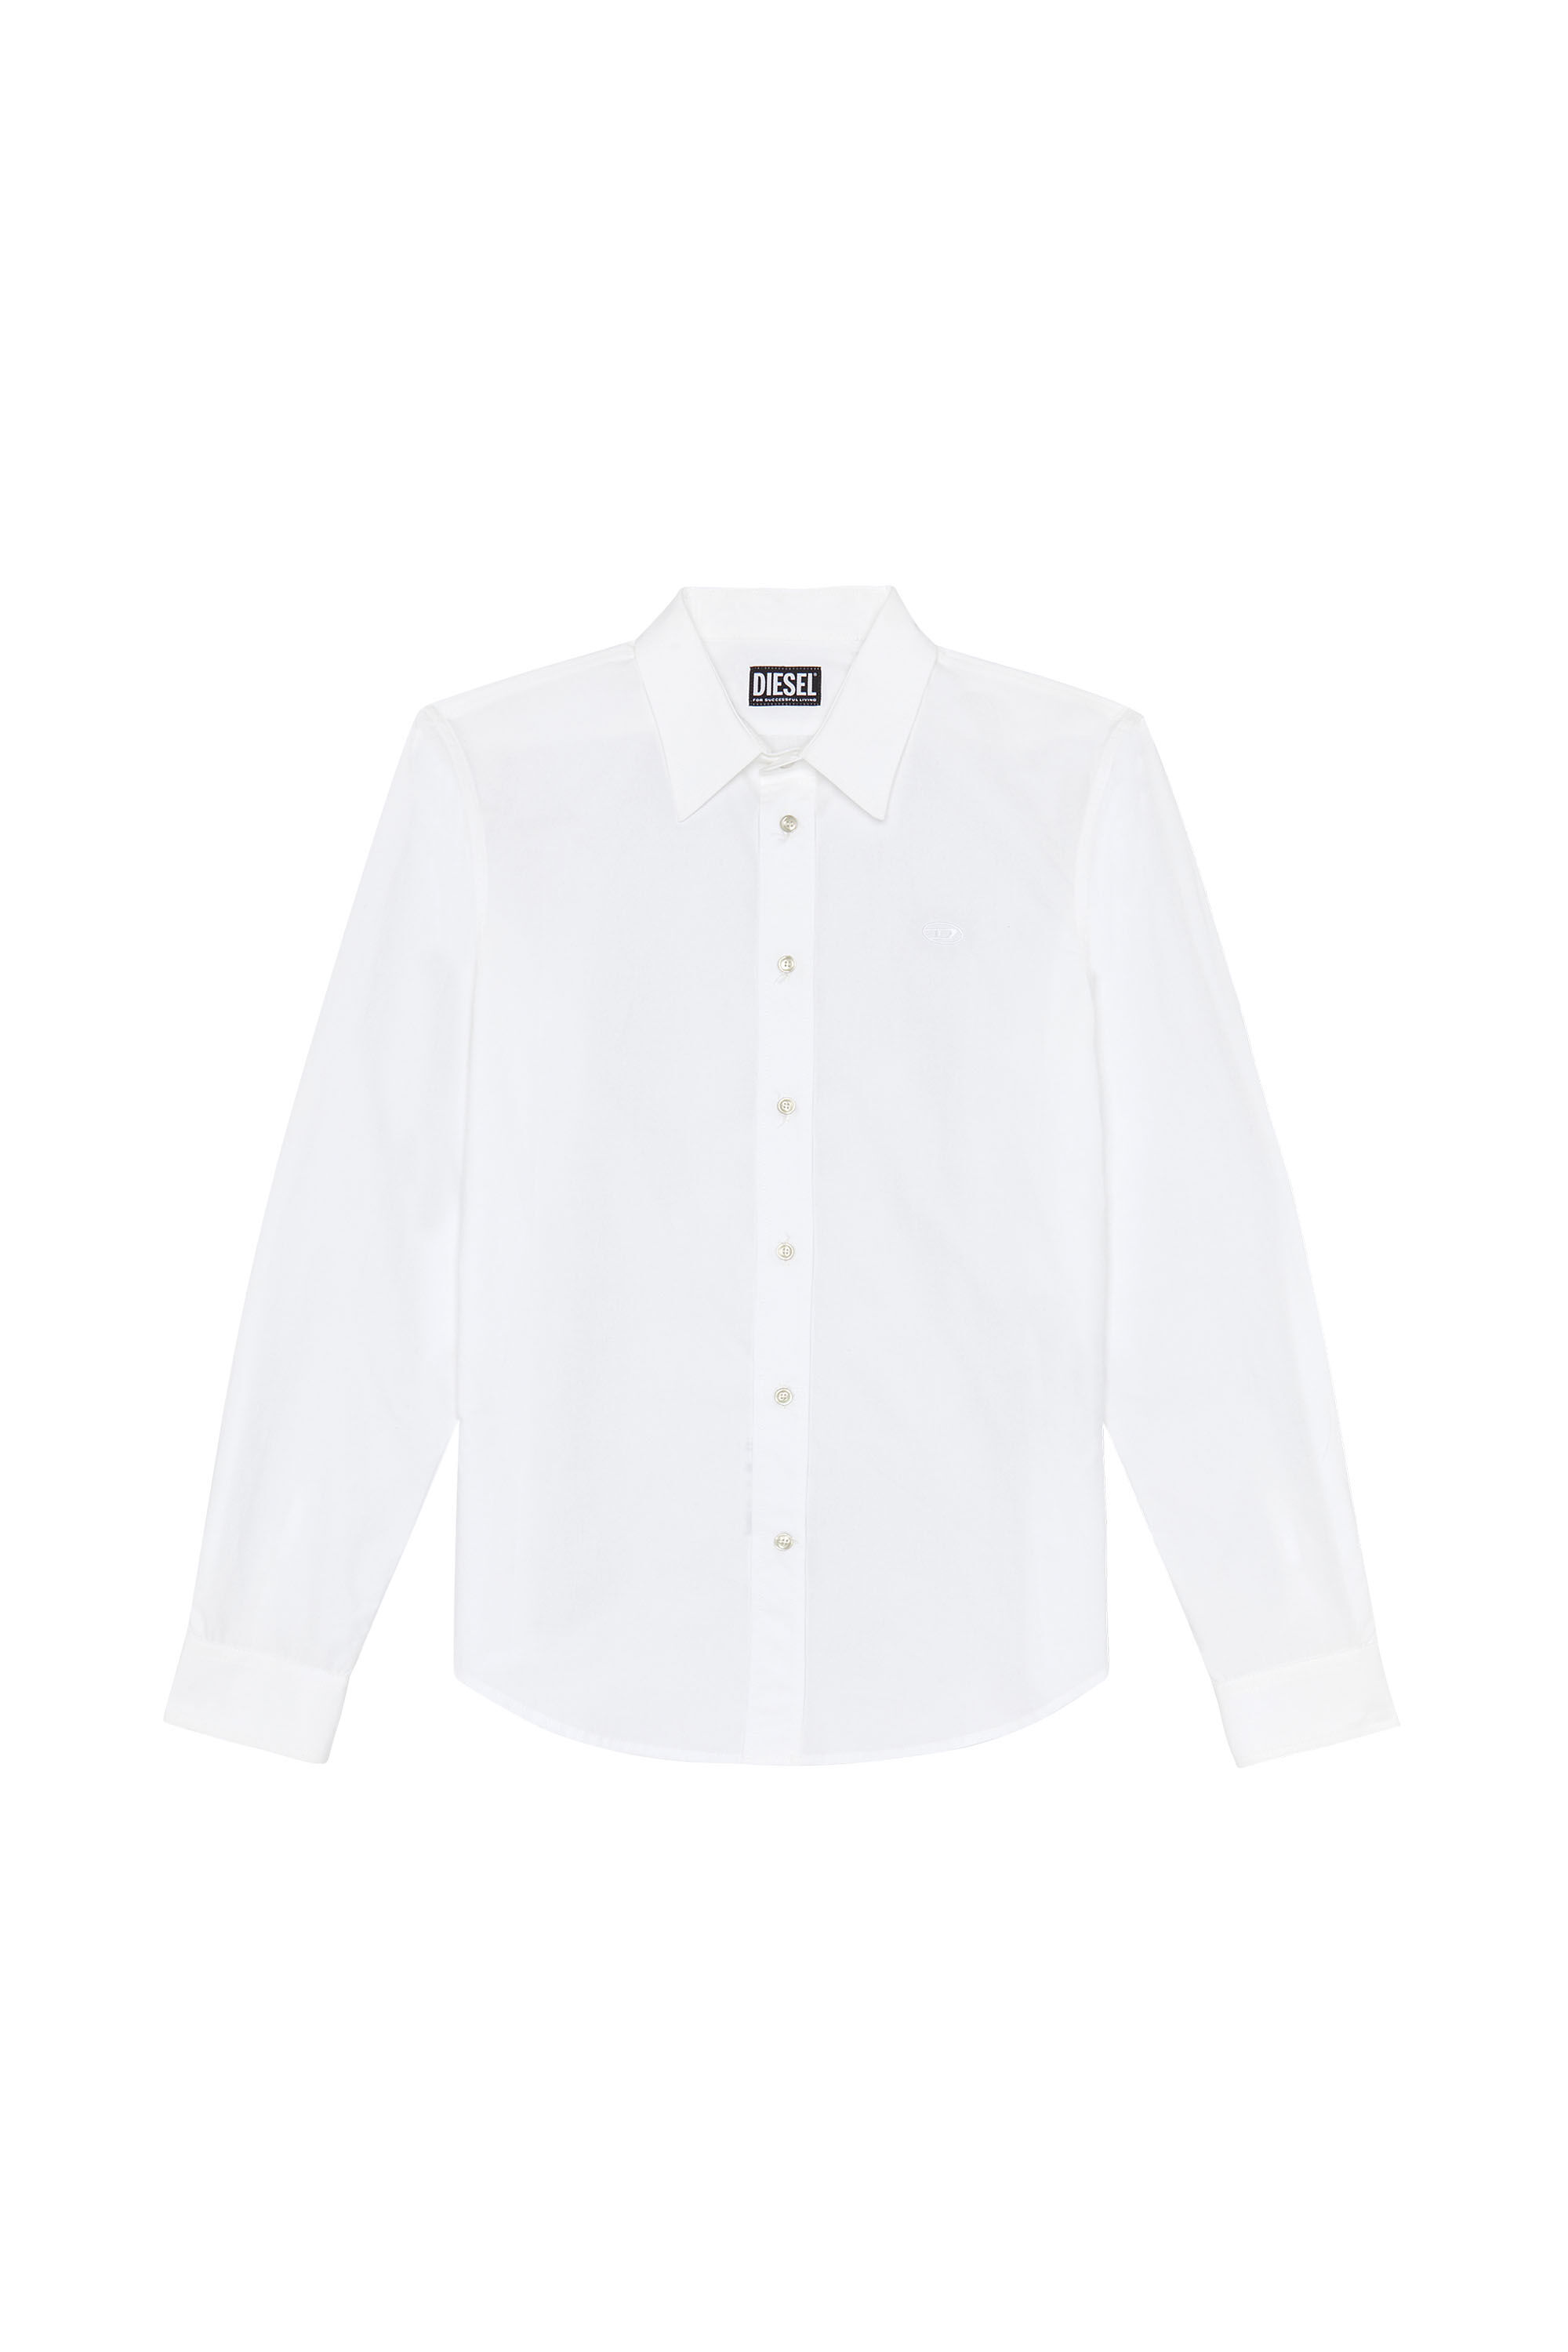 Diesel - S-BEN-CL, Man Shirt in technical cotton in White - Image 2